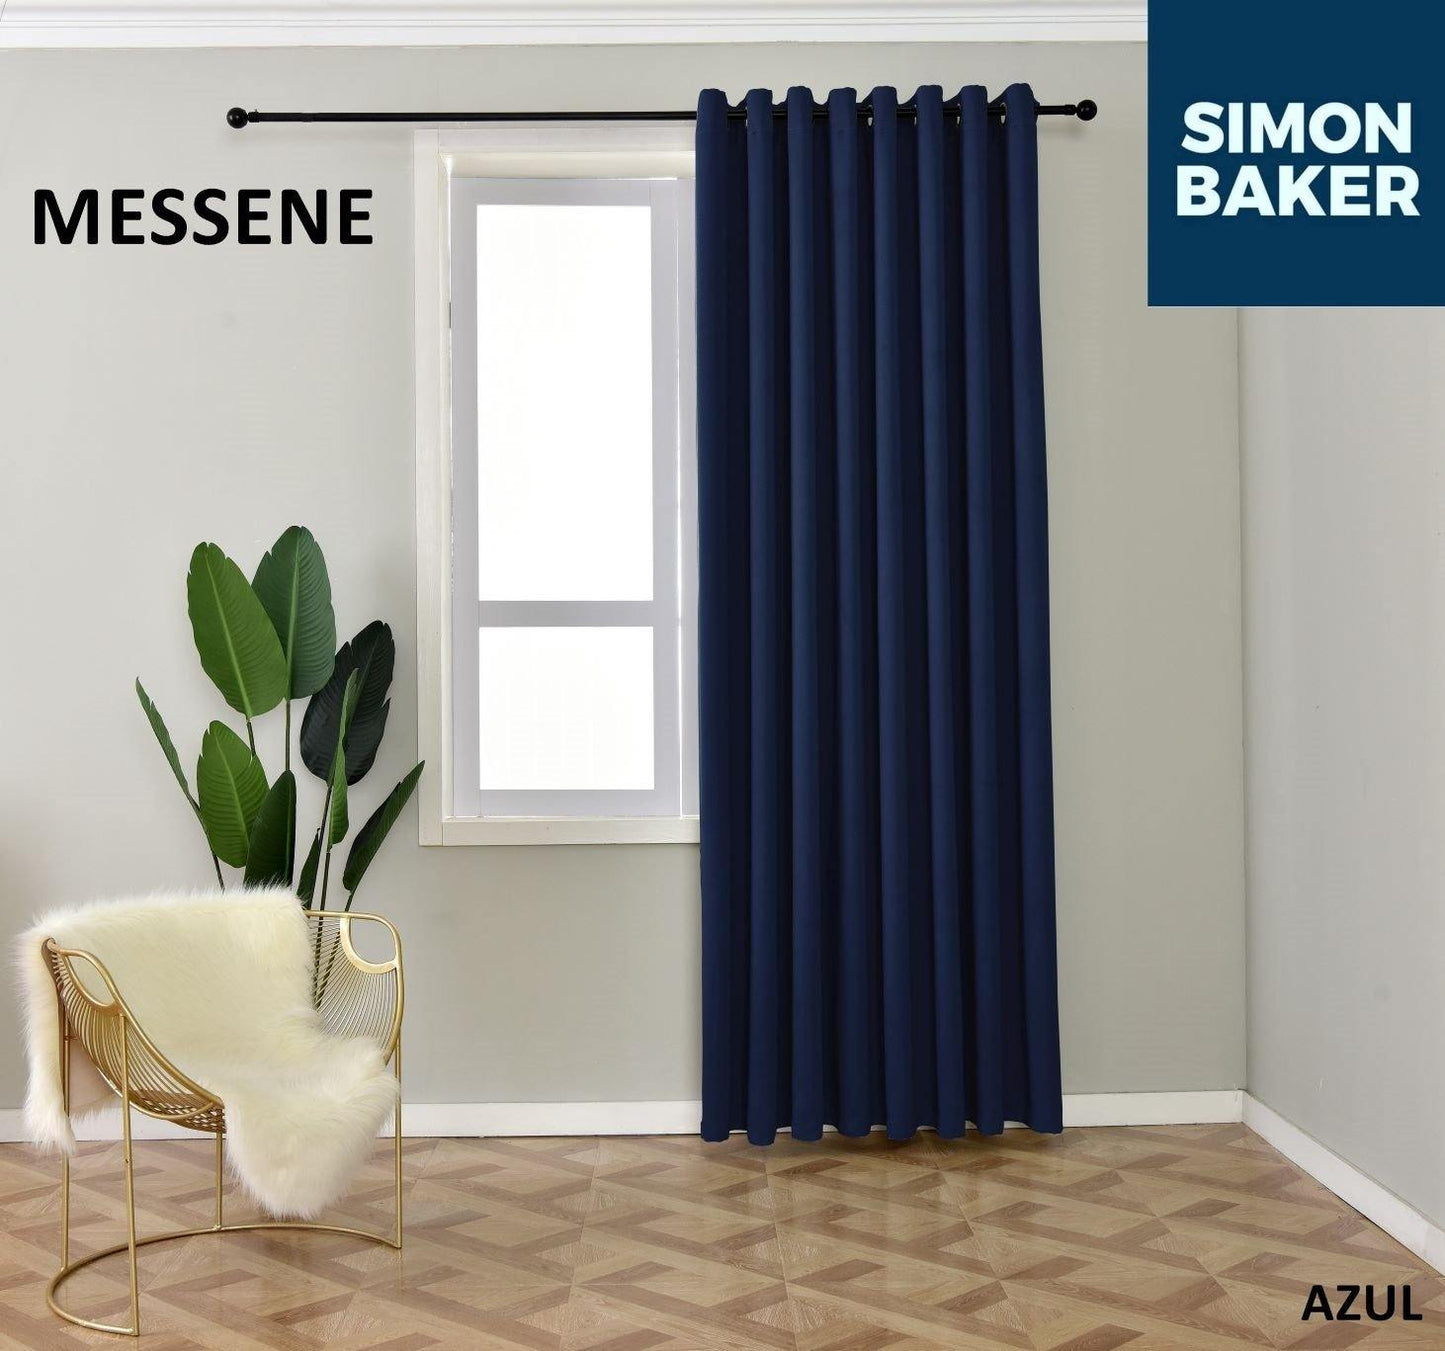 Simon Baker | Messene Eyelet Azul Curtain (Various Lengths)